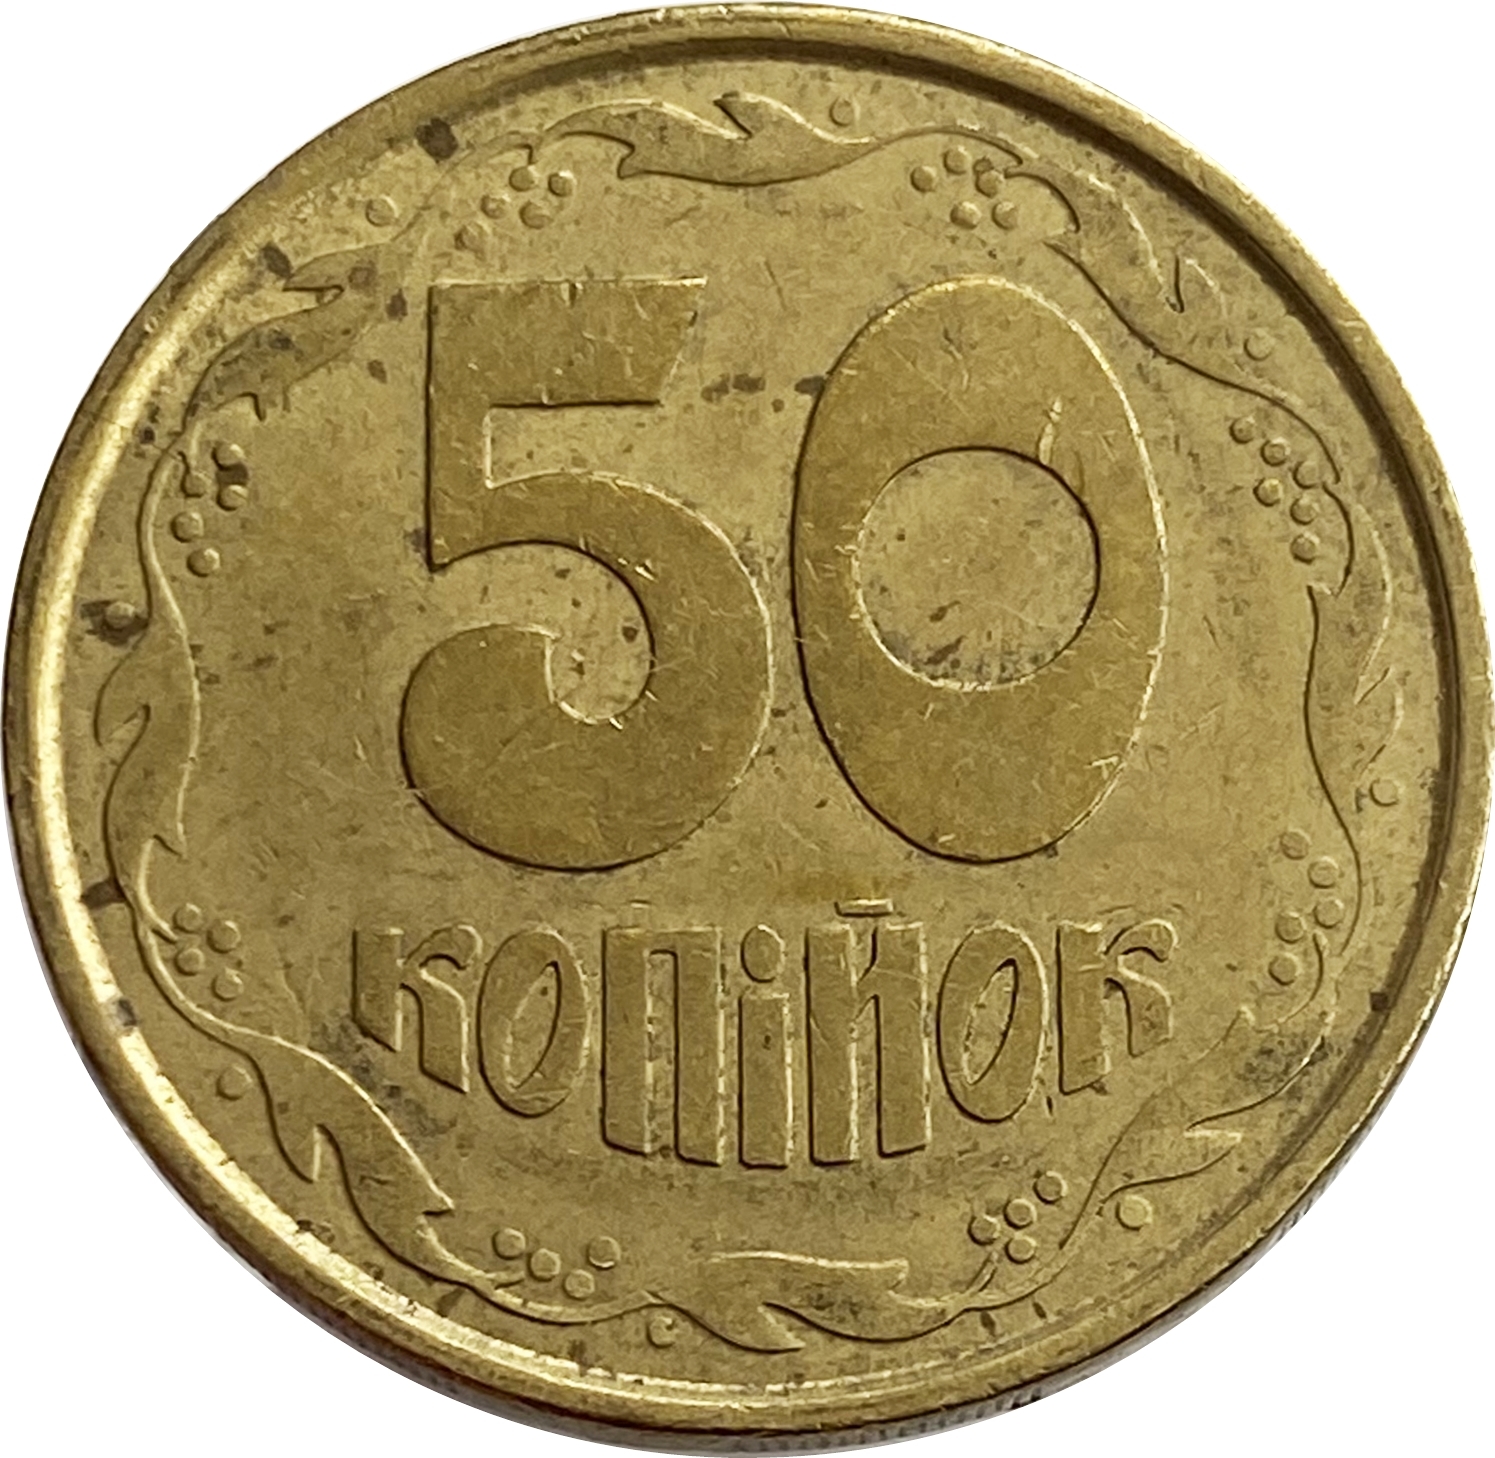 Покупка 50 копеек. 50 Копеек Украина. Монета 50 копеек Украина. Украинская монета 50 копеек 1992 года. 50 Украинских копеек.